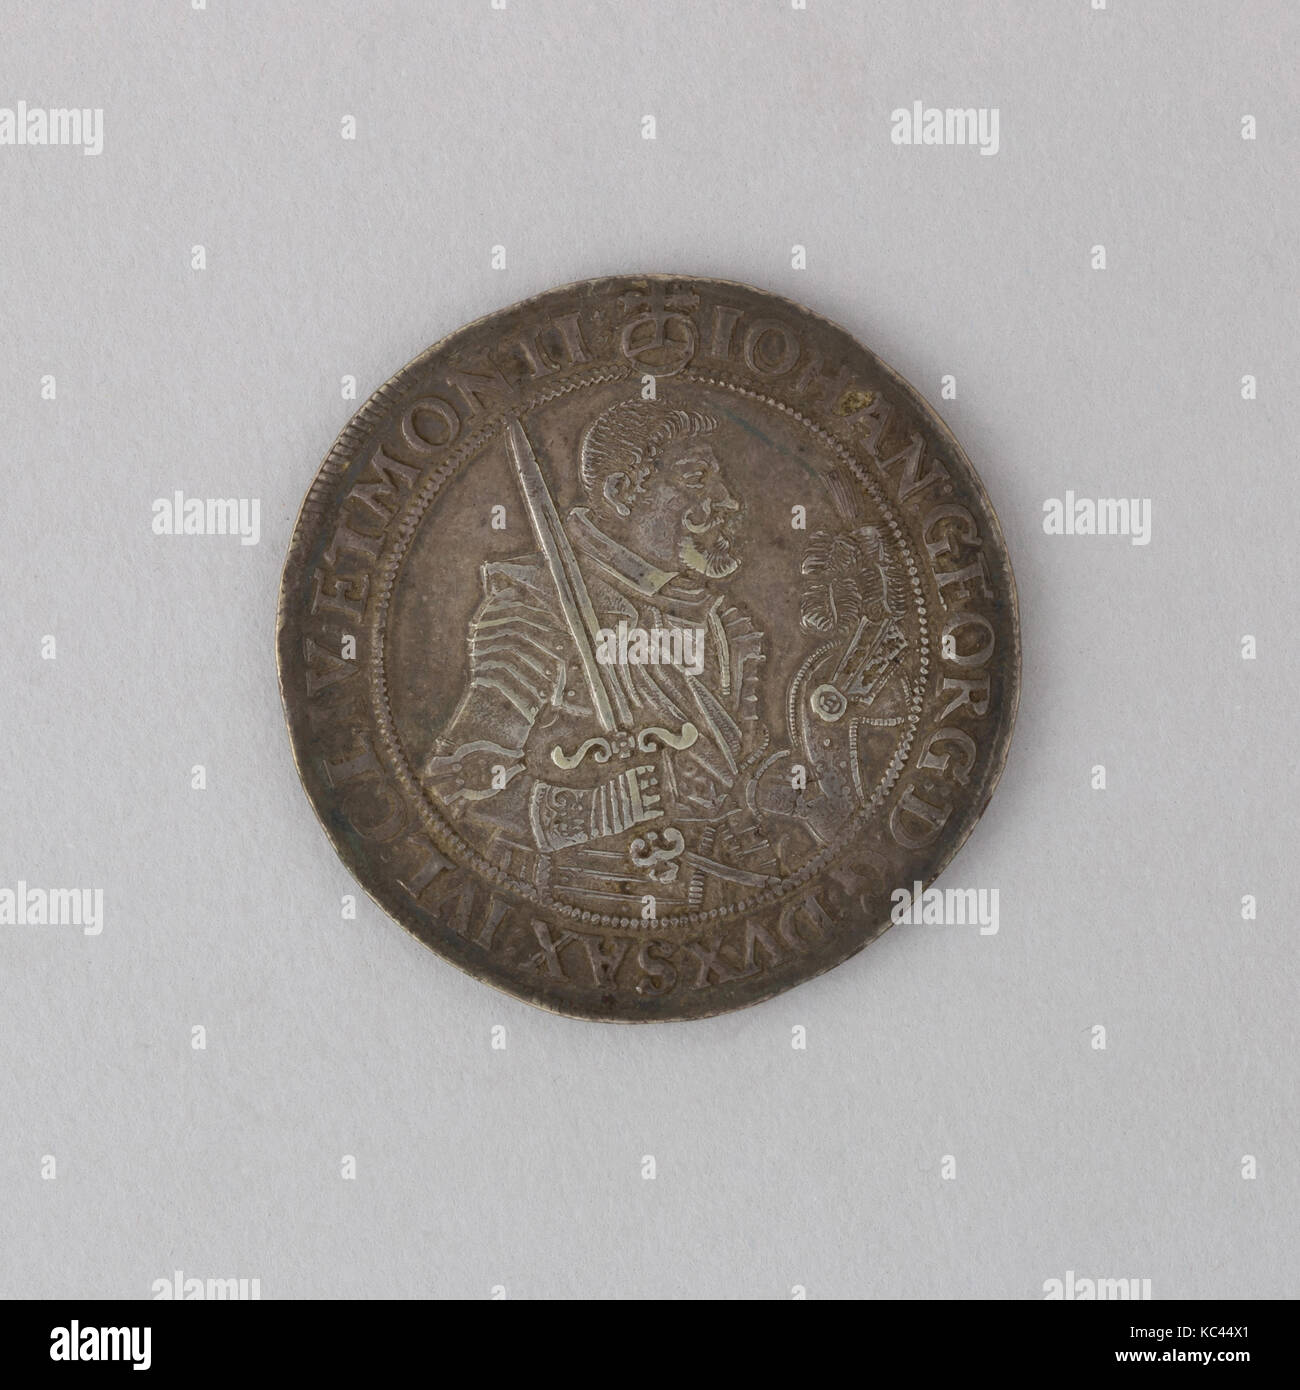 Coin (Thaler) Showing John George I, Duke of Saxony, 1629 Stock Photo